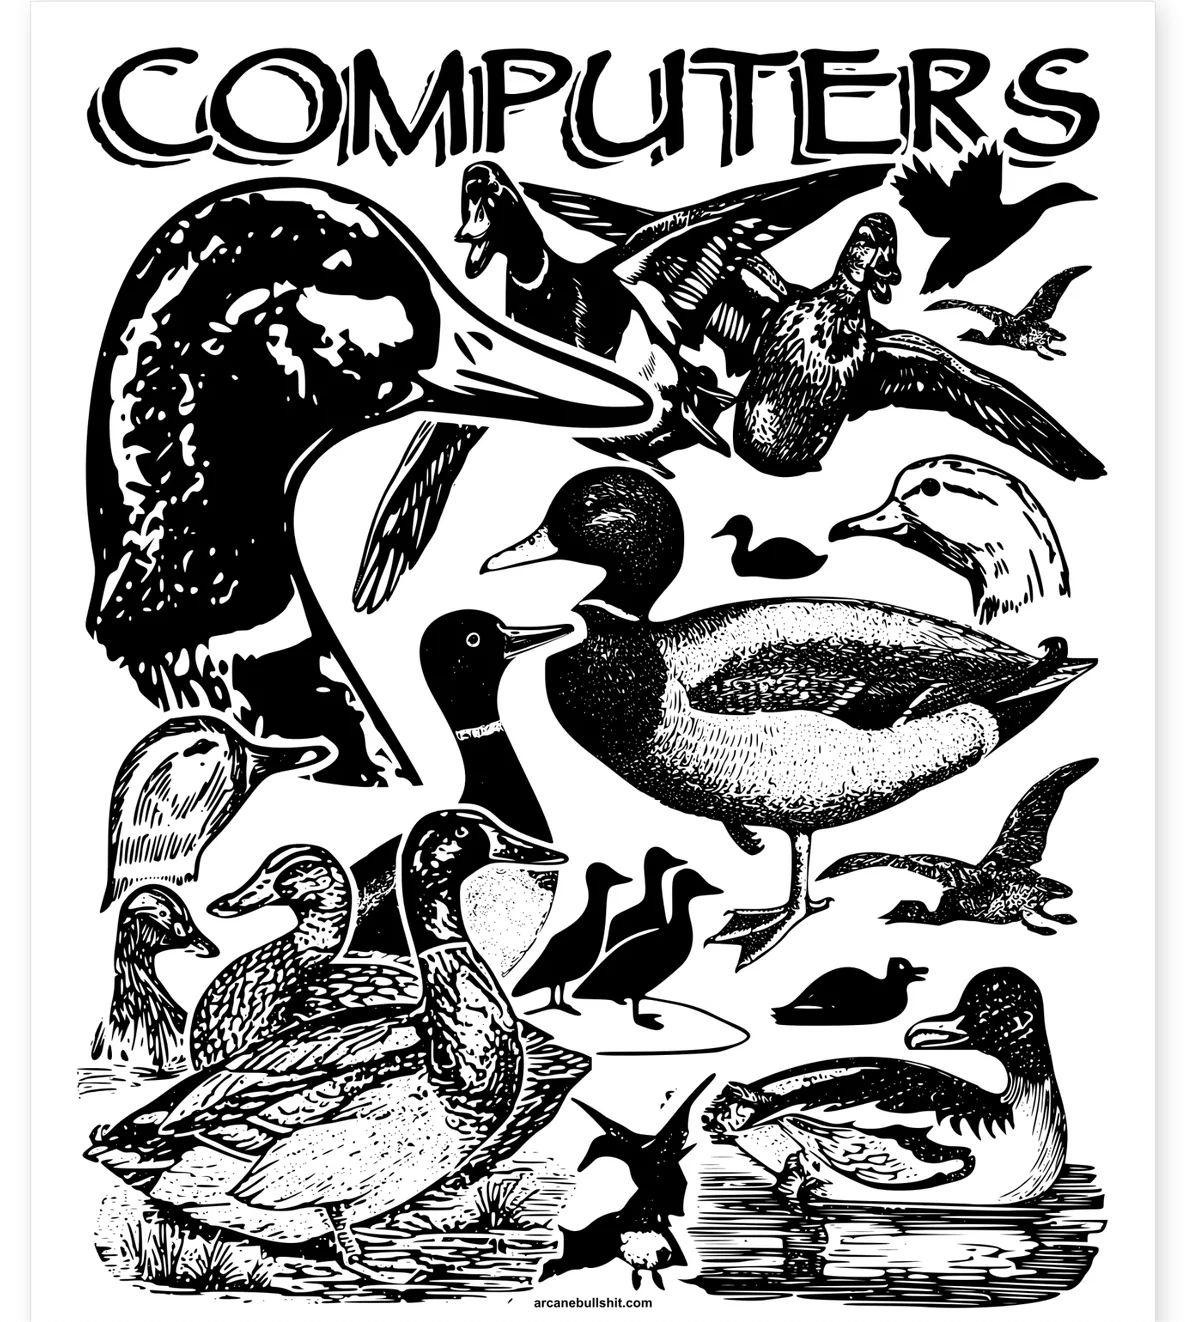 Computers Risograph Print